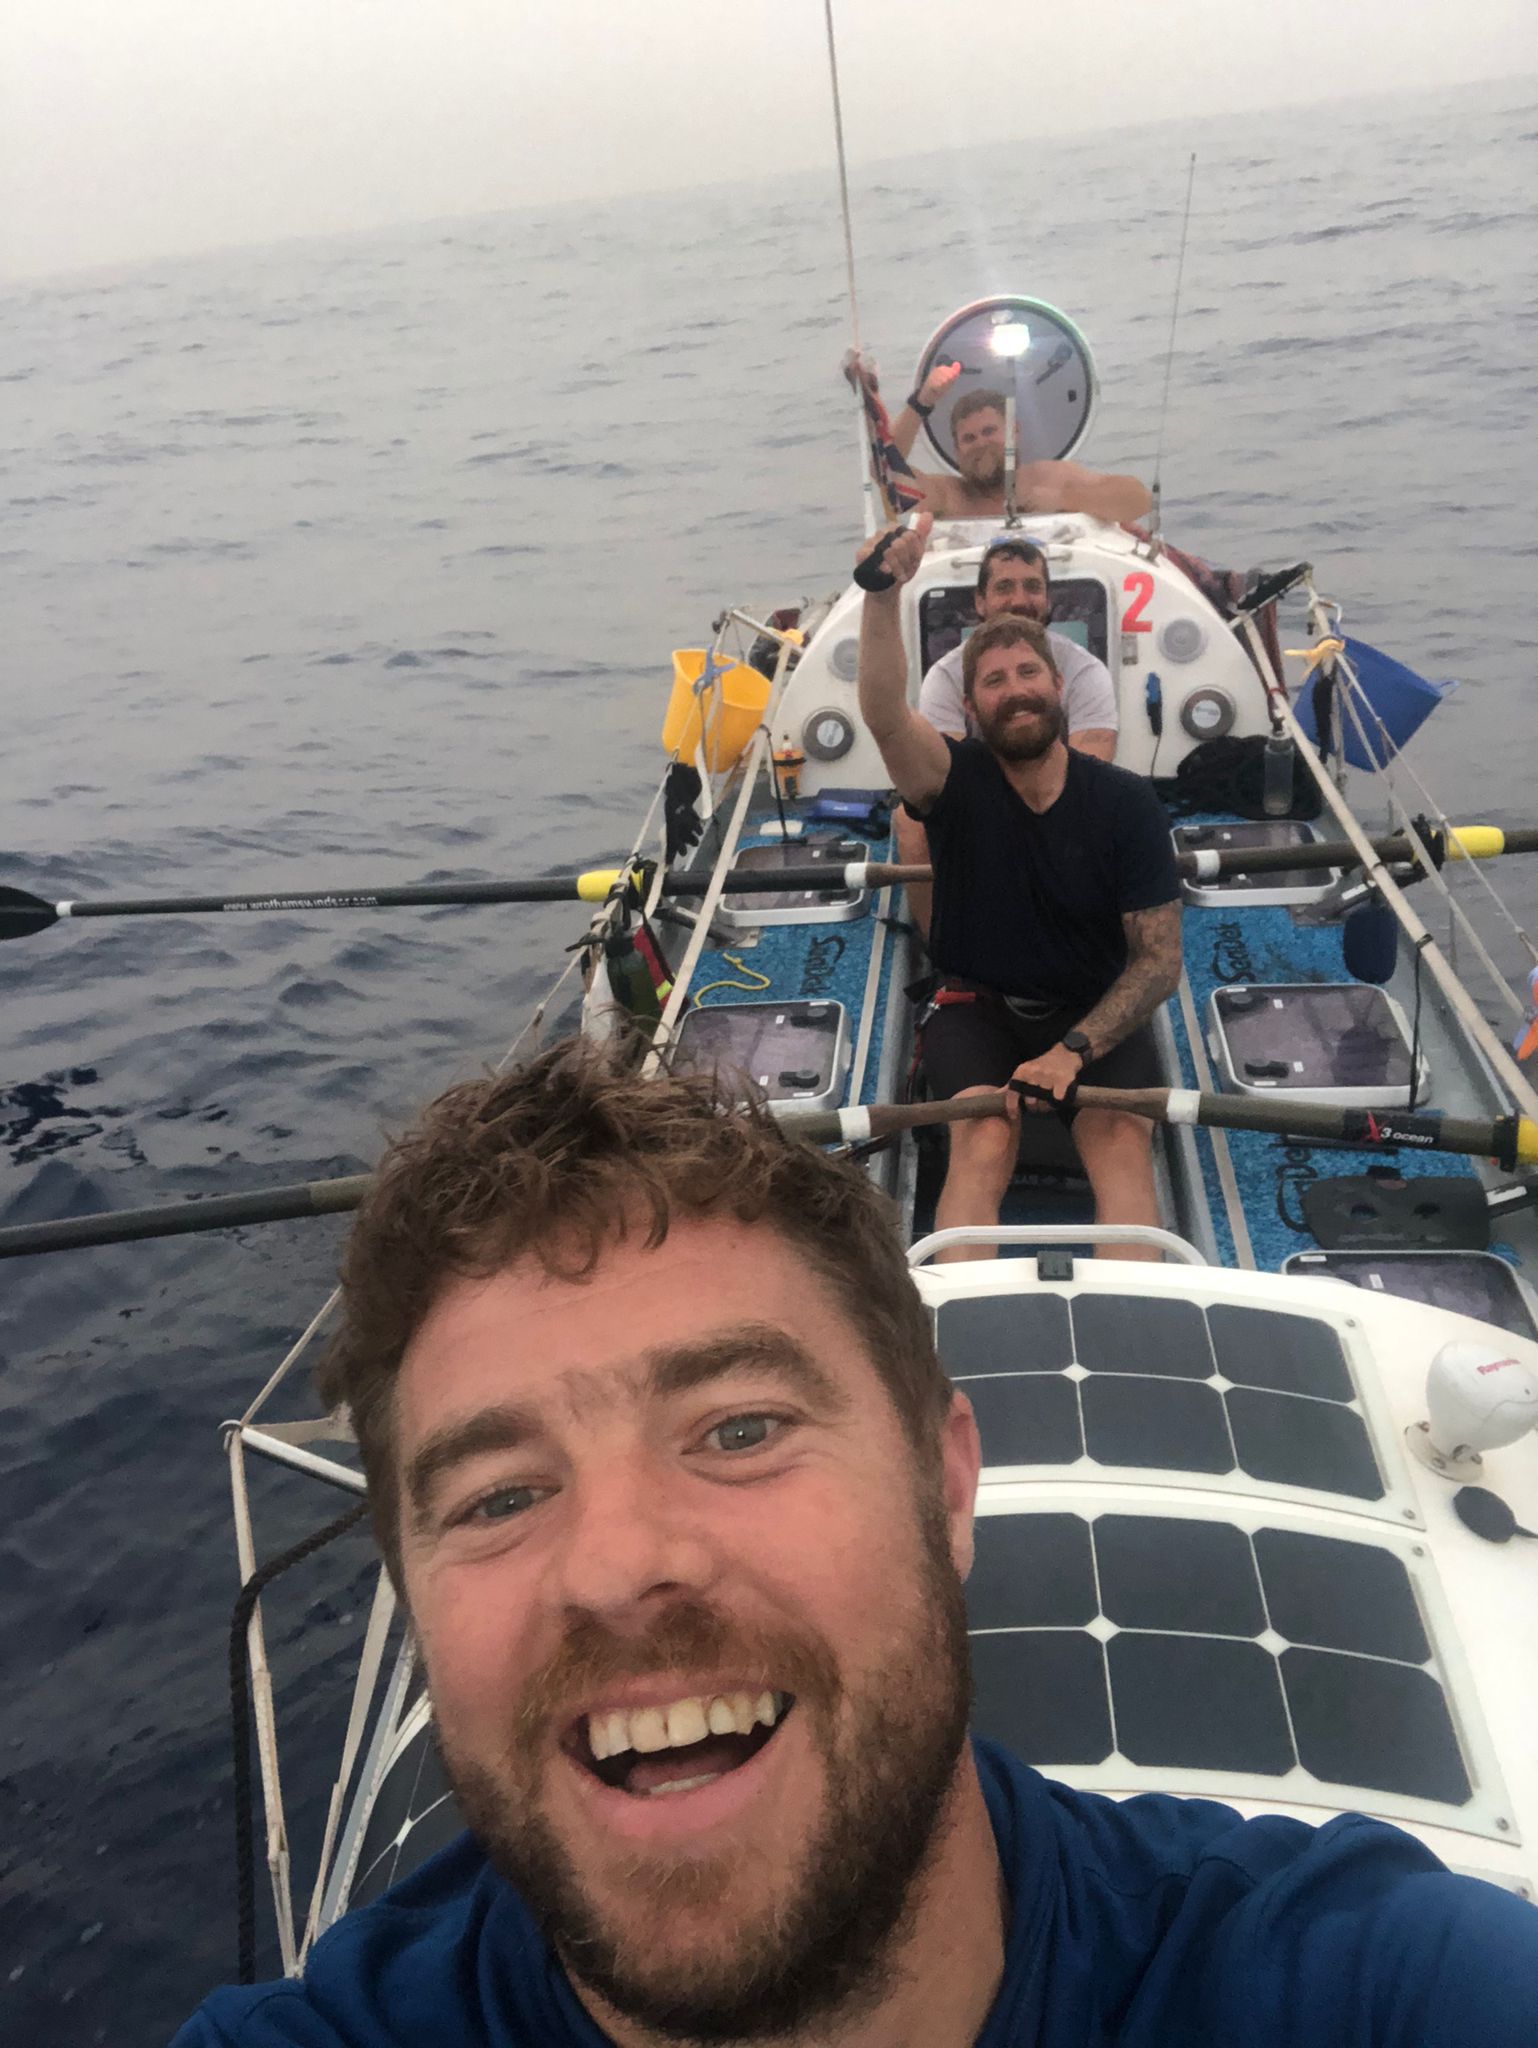 Team selfie on the boat.